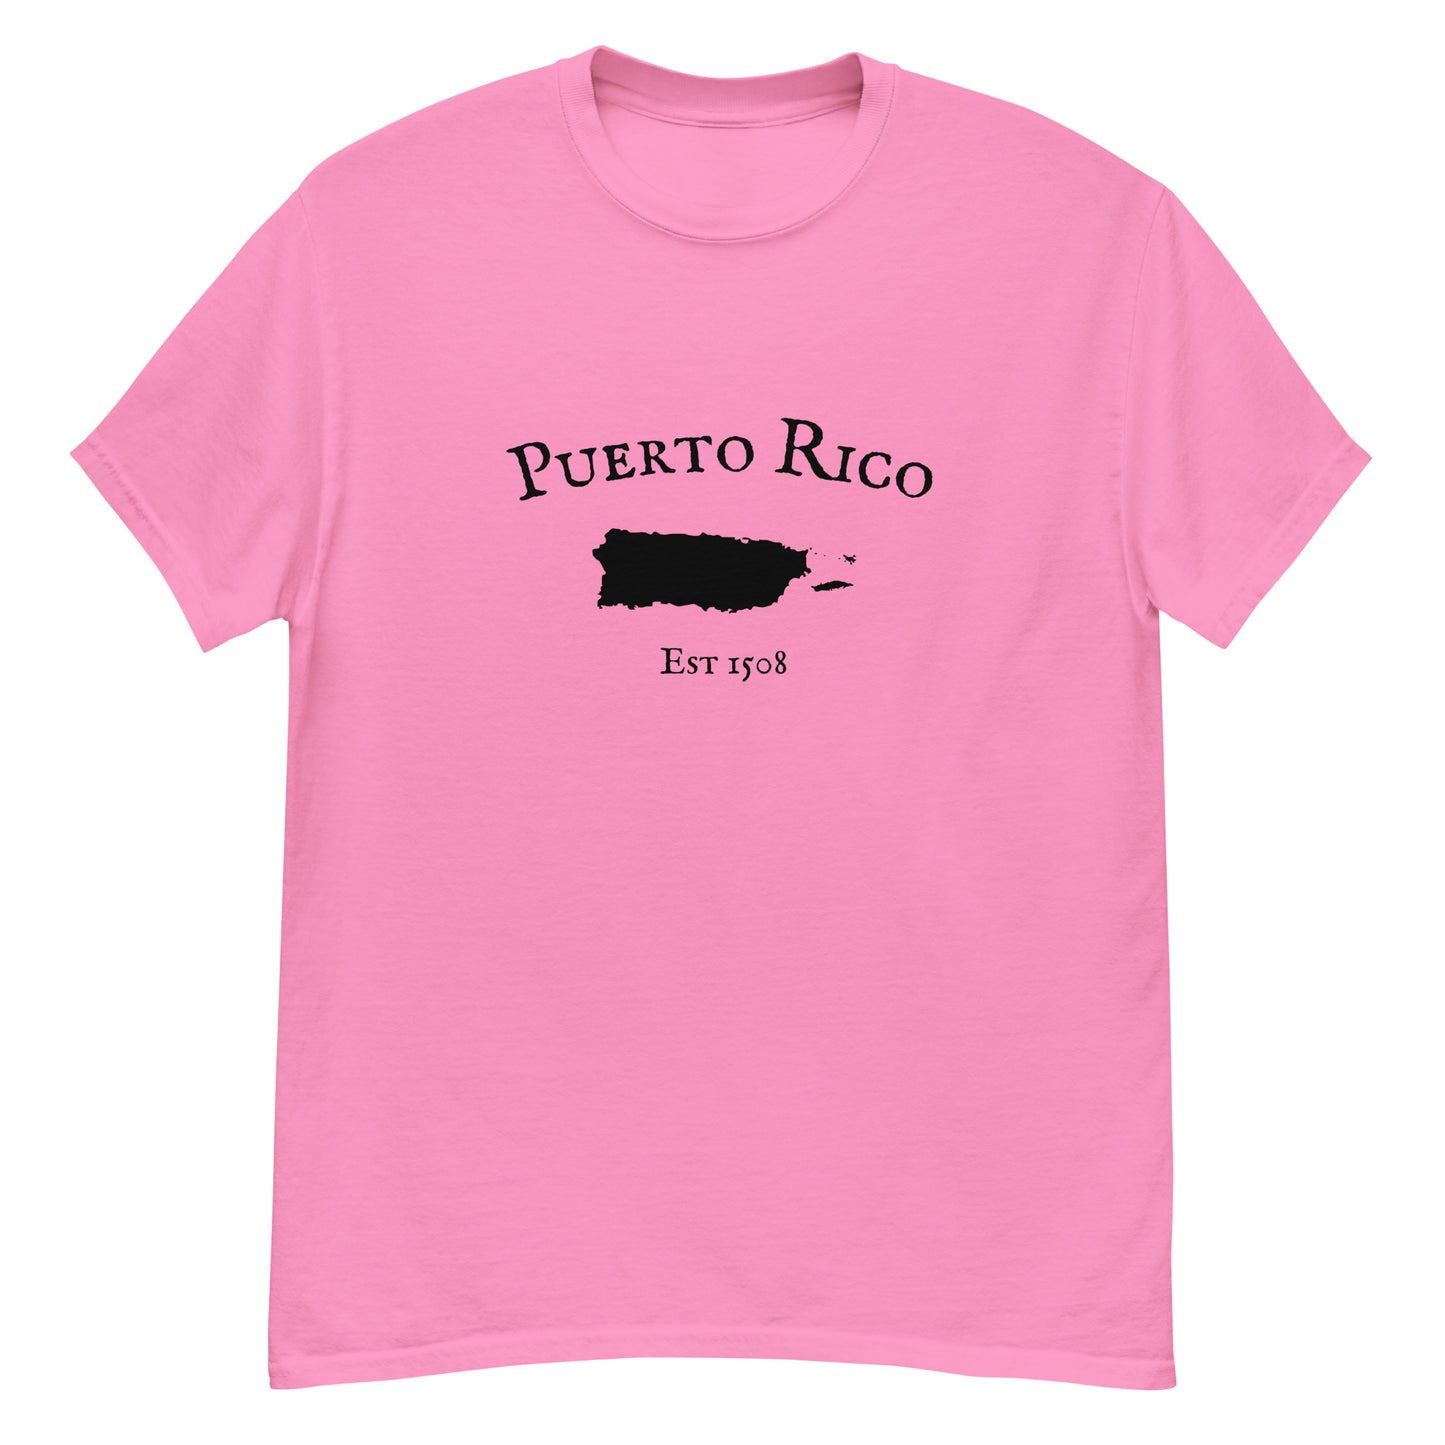 Sustainable fashion choice Puerto Rico men's t-shirt